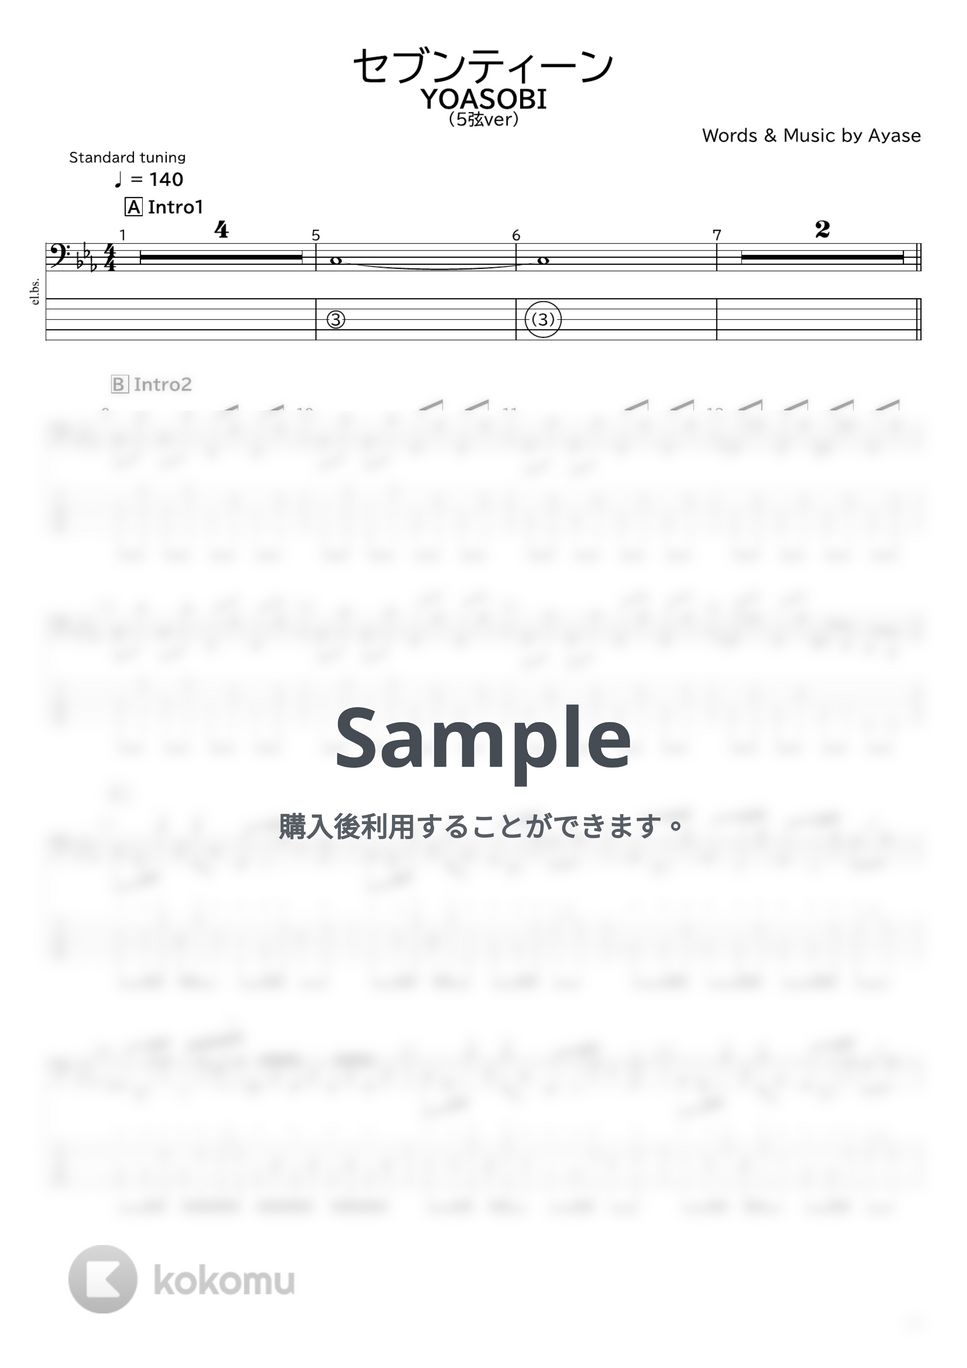 YOASOBI - セブンティーン(5弦ver) by たぶべー